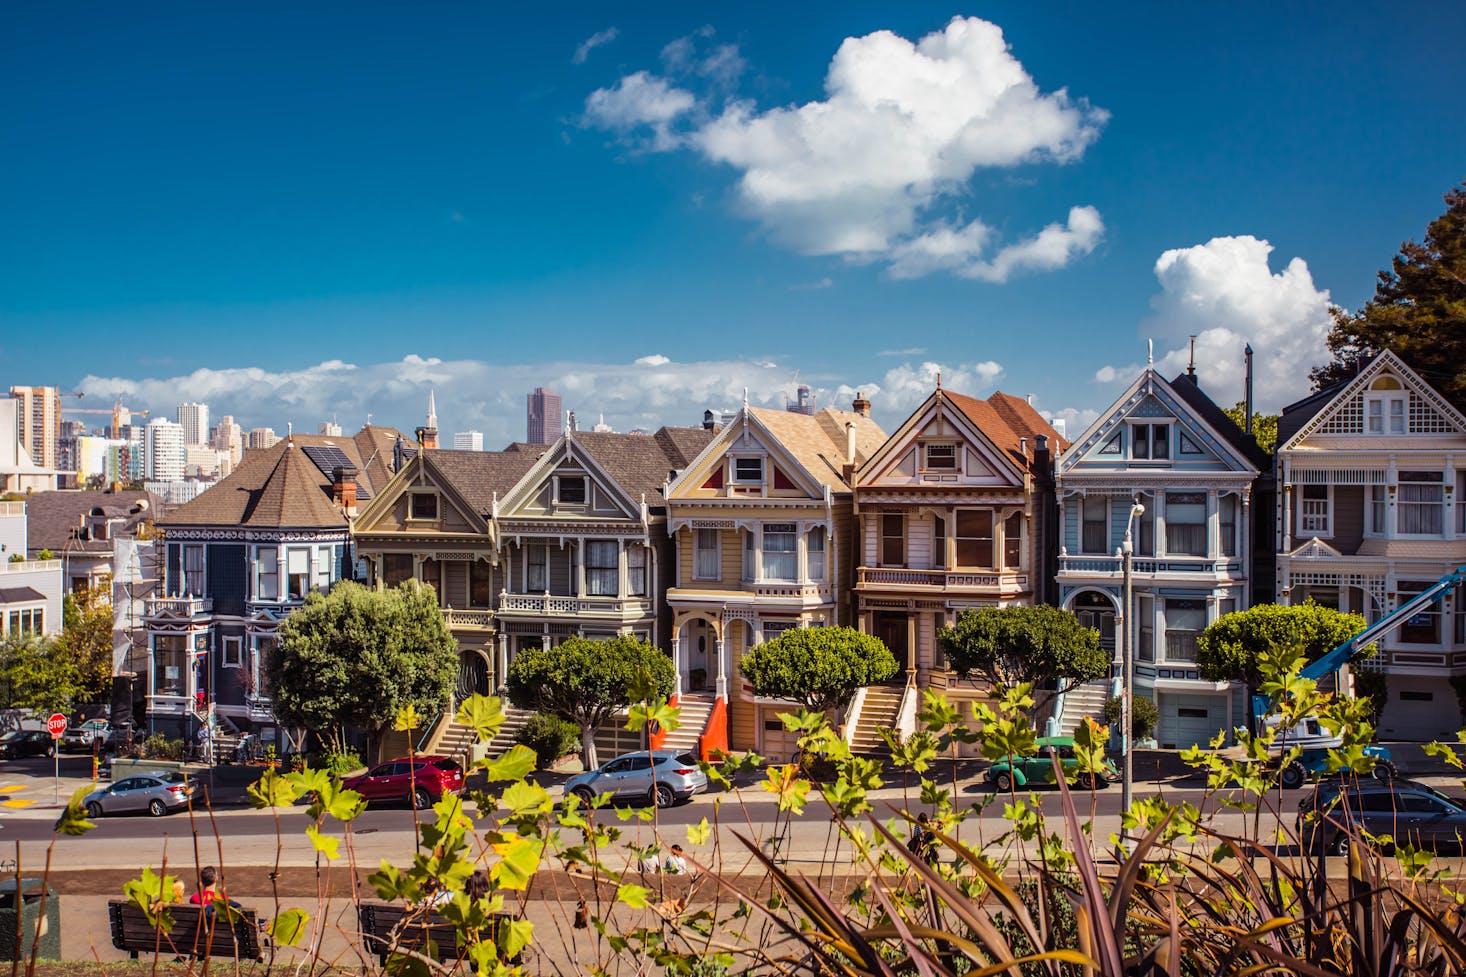 Residential neighborhood of San Francisco, California